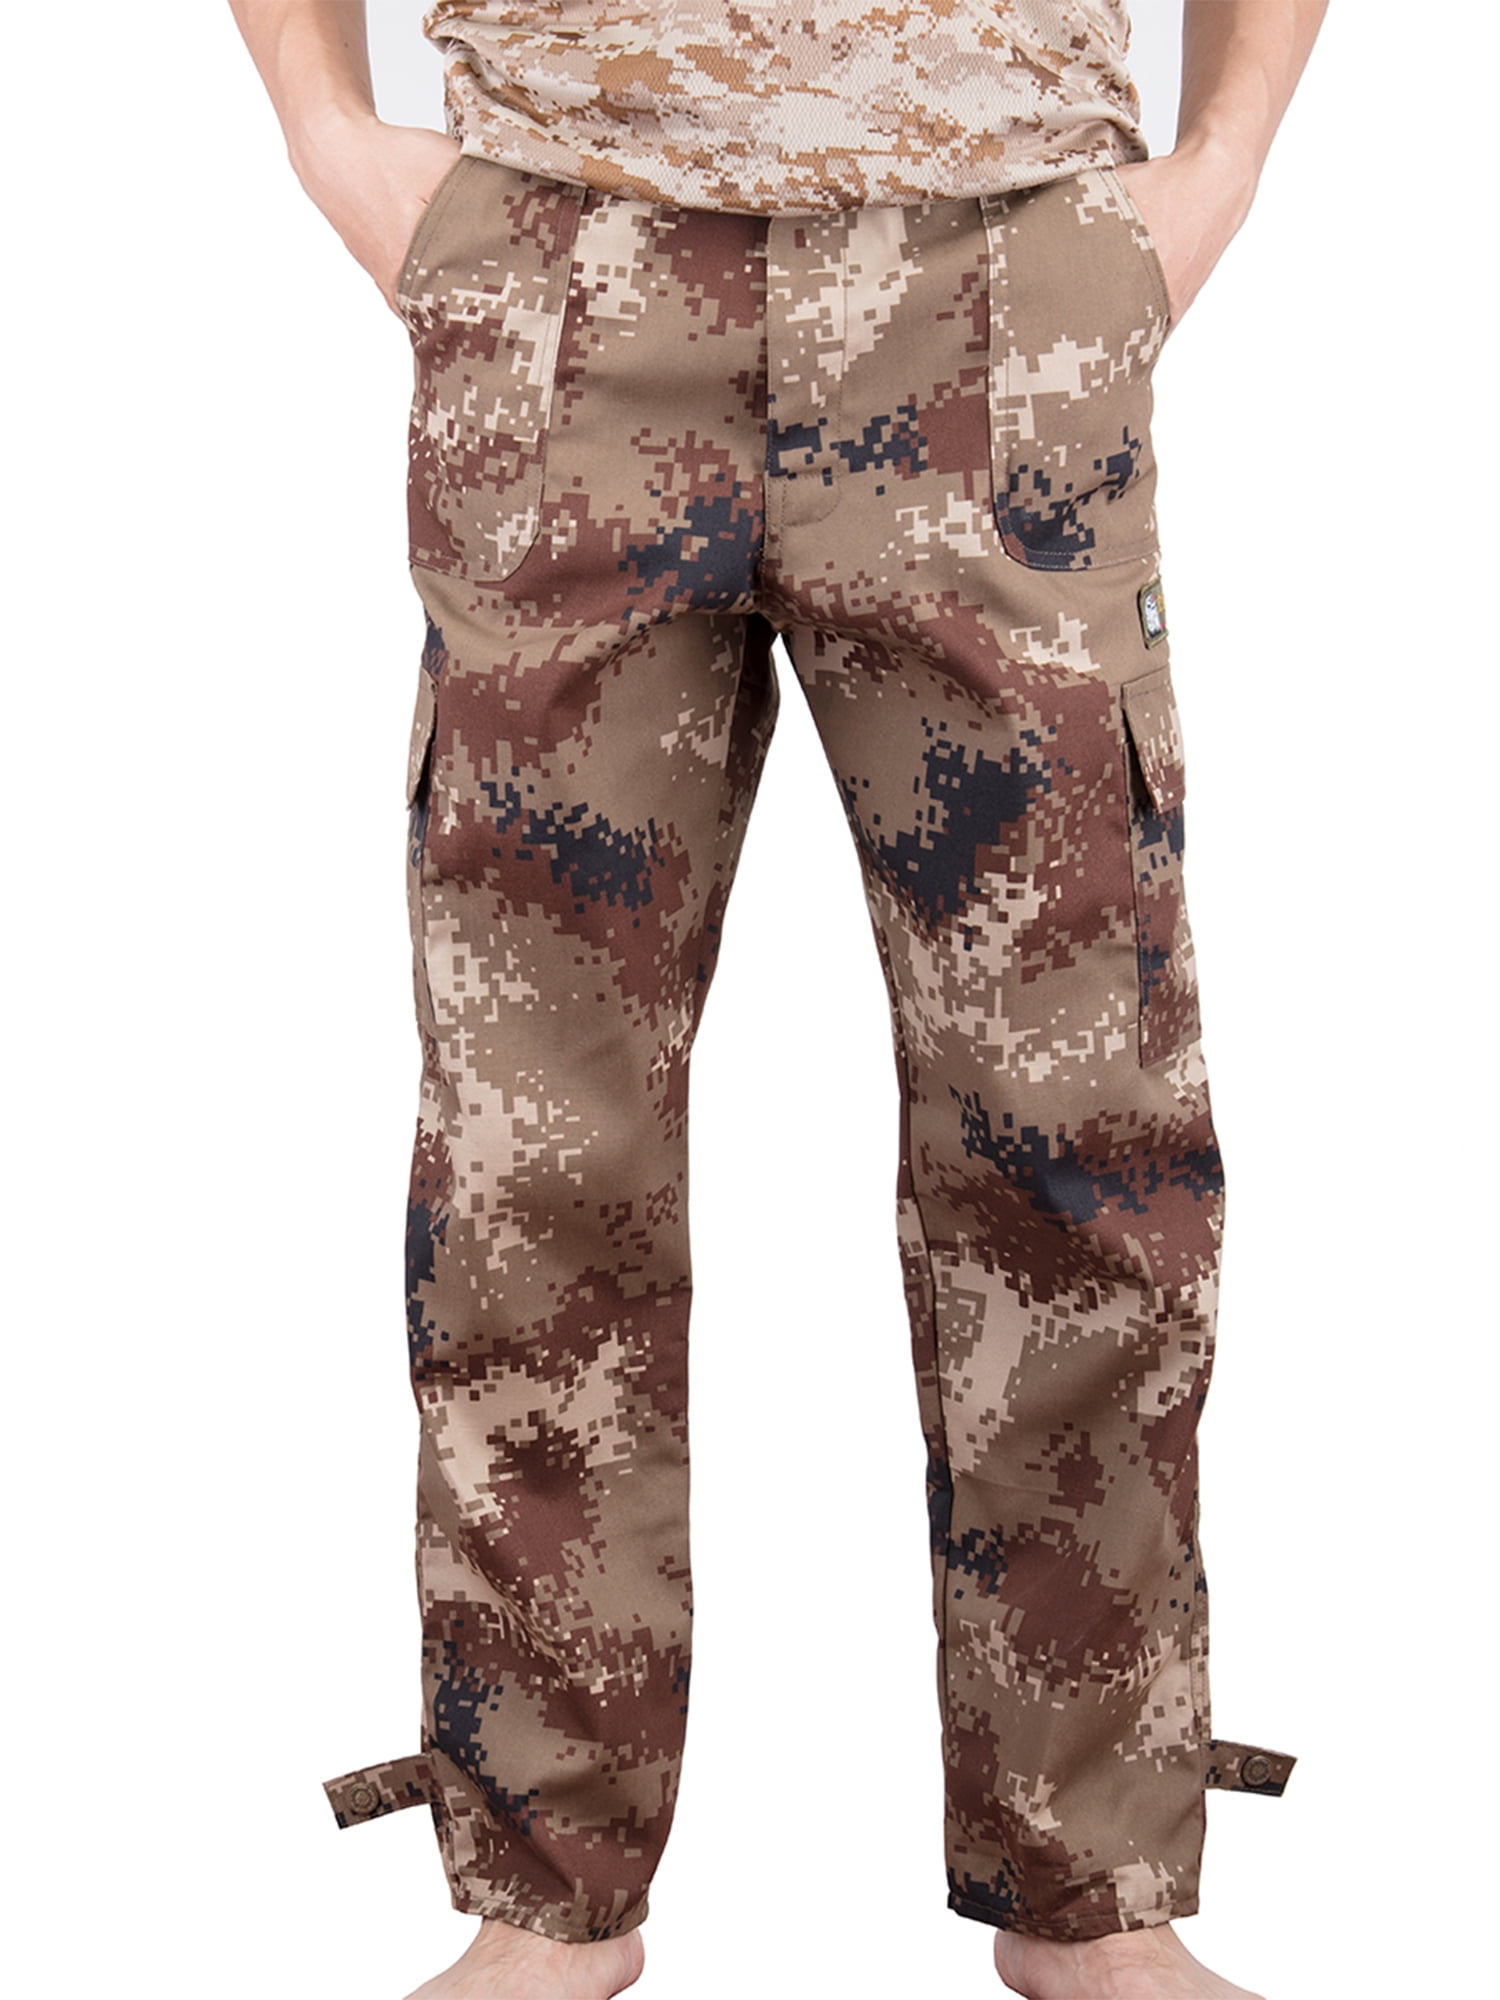 SAYFUT Men's Cargo Pants Military Style Tactical Camo BDU Big and Tall Pant S-4XL - Walmart.com